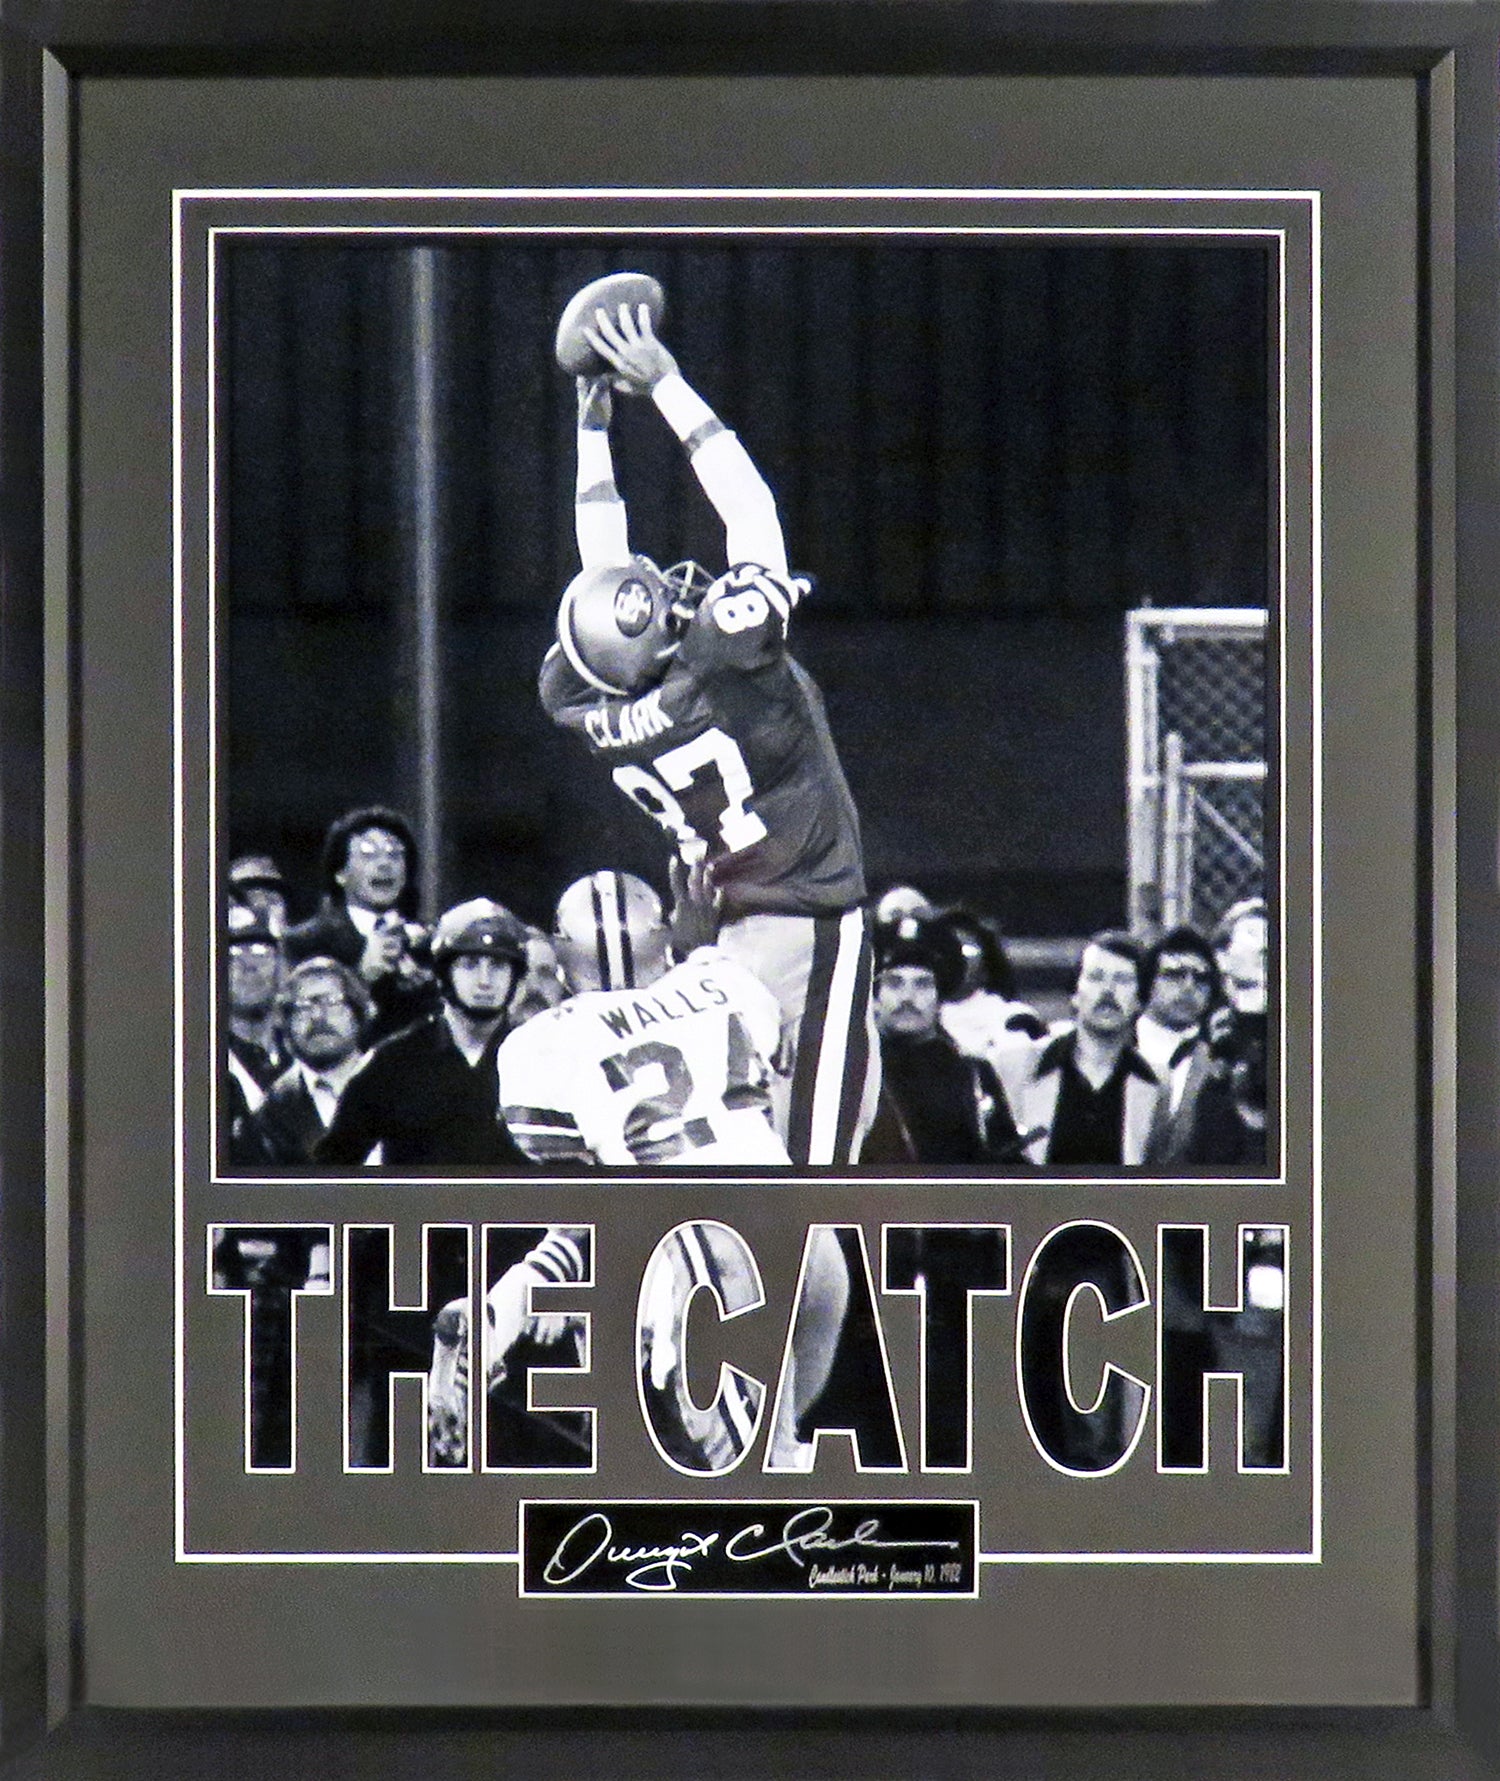 Dwight Clark 1981 NFC Championship Catch San Francisco 49ers 8x10 Framed  Photo